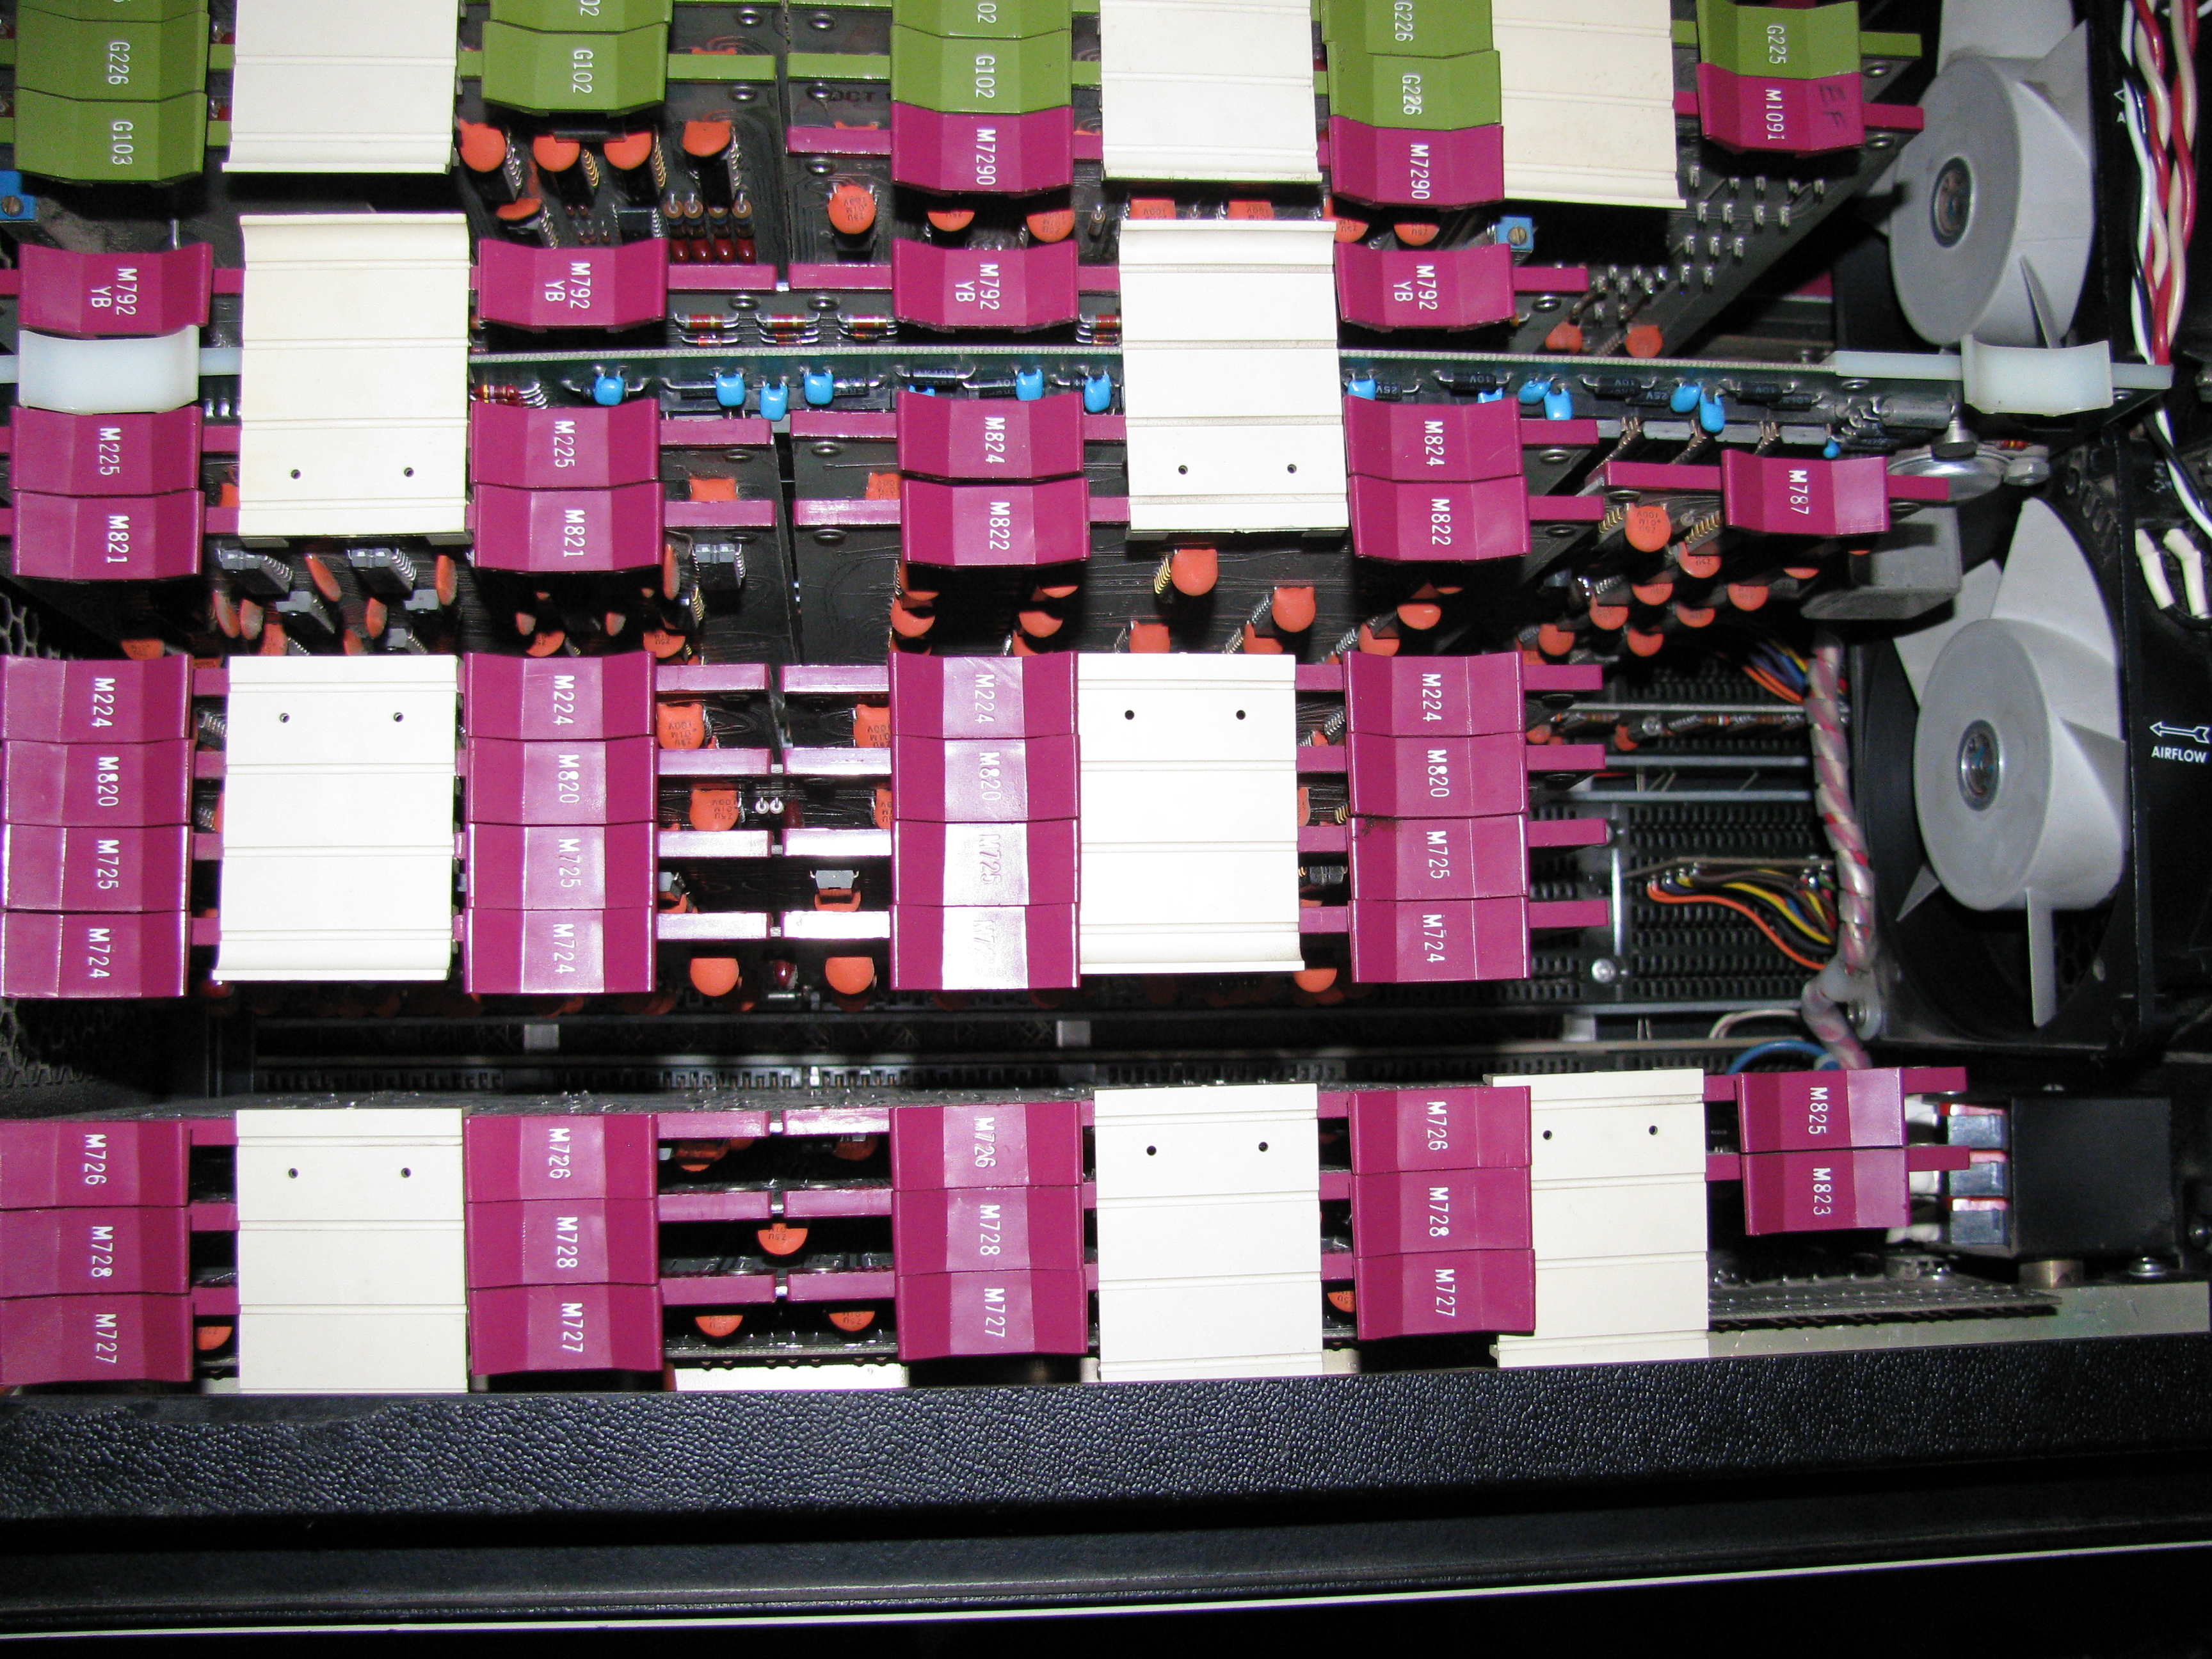 Hannes PDP-11/20 CPU